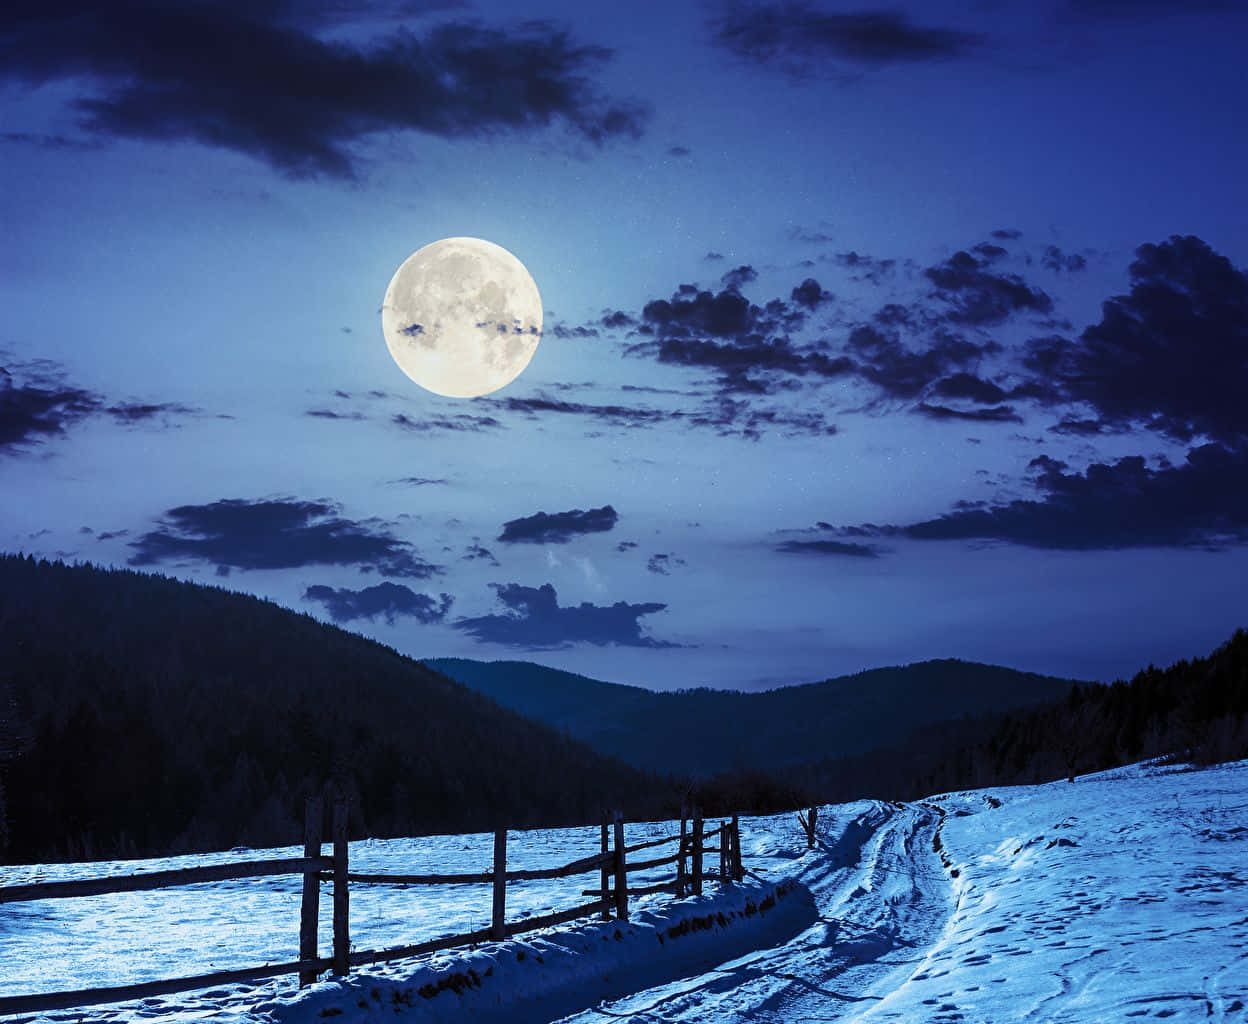 Imagende La Luna Nocturna, Cuerpo Celestial.